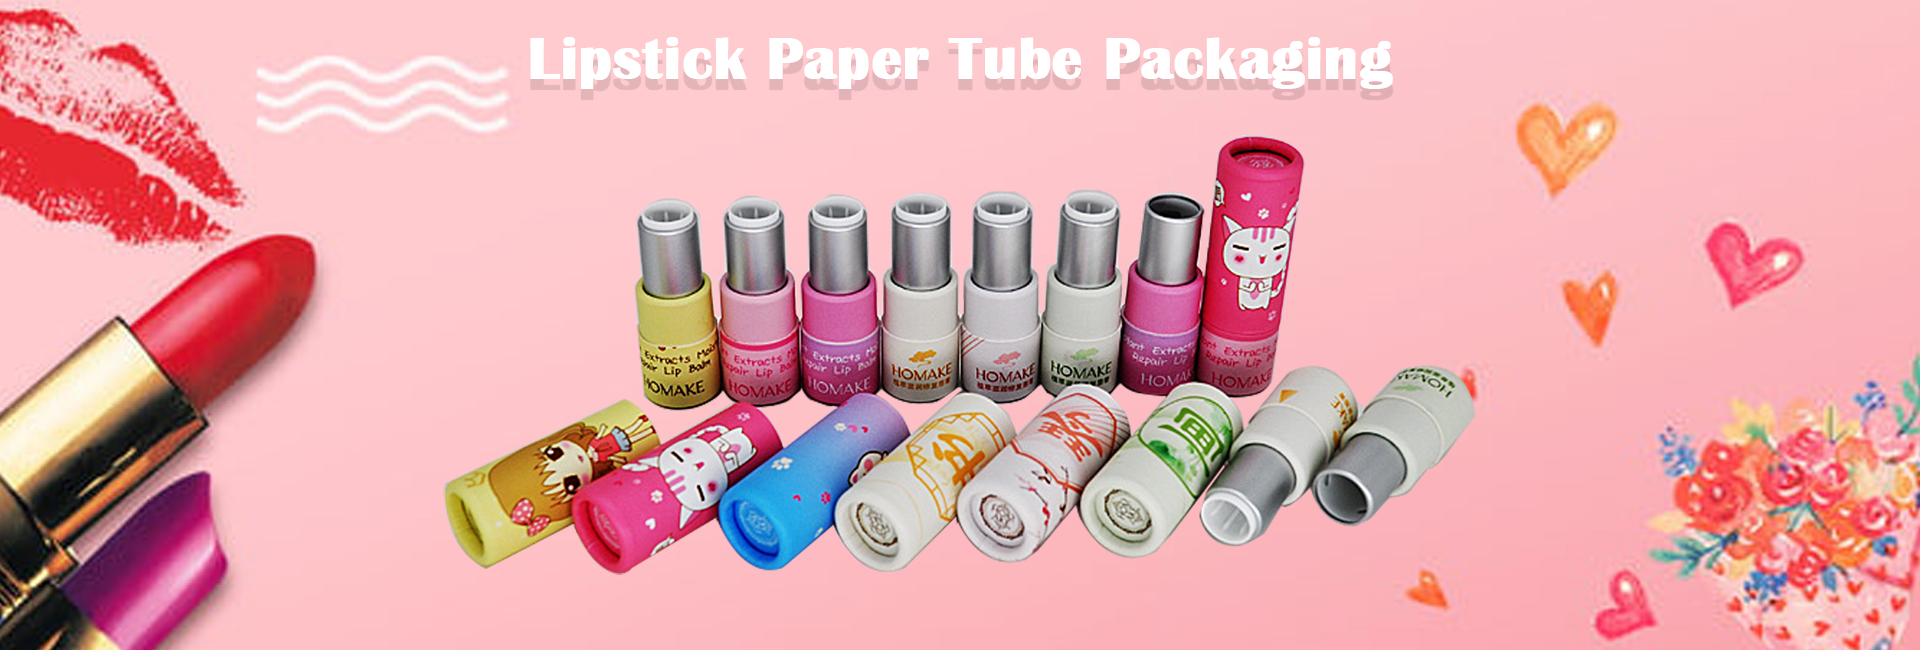 Lipstick Paper Tube Packaging